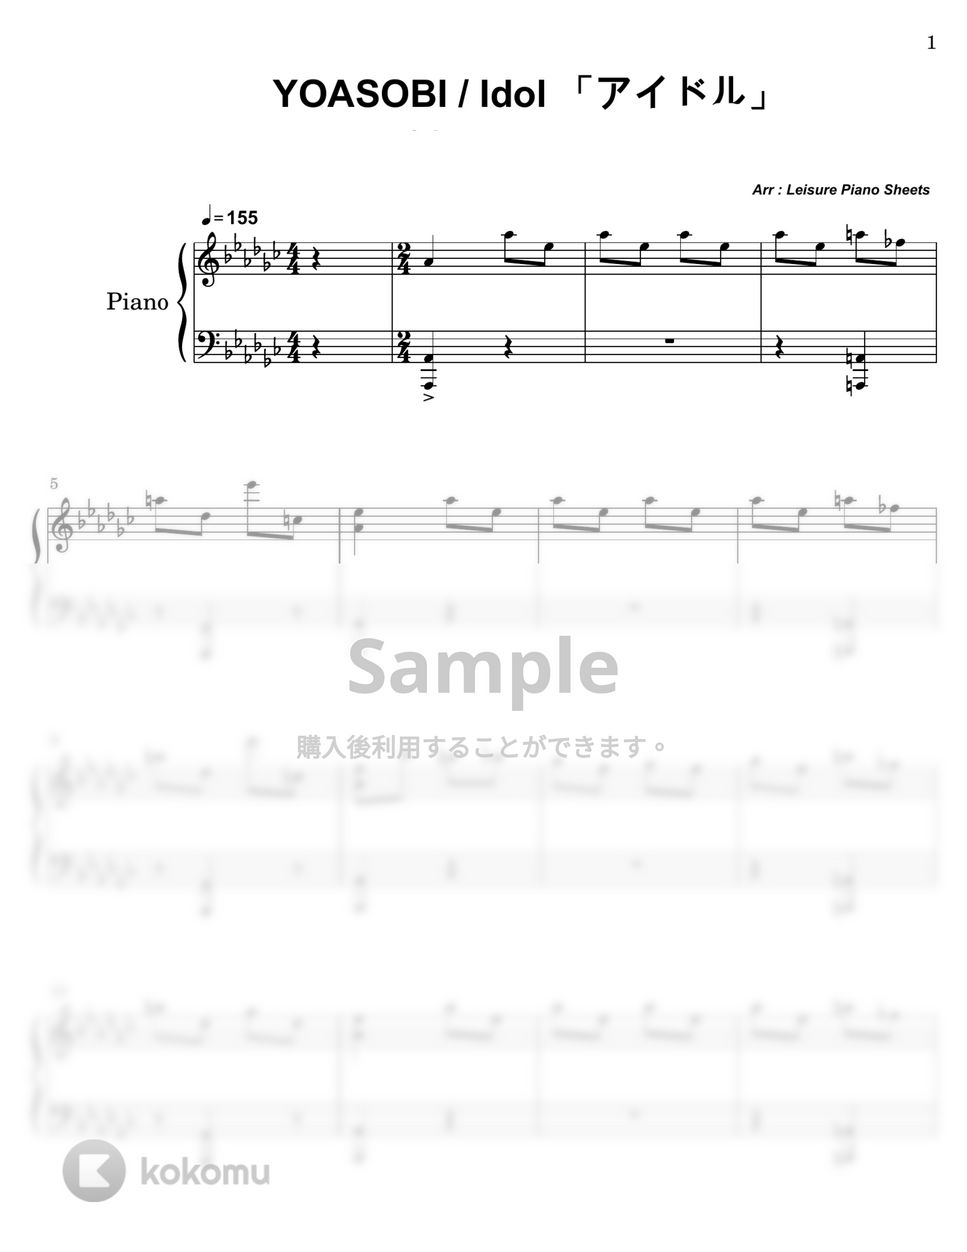 YOASOBI - Idol (アイドル) by Leisure Piano Sheets